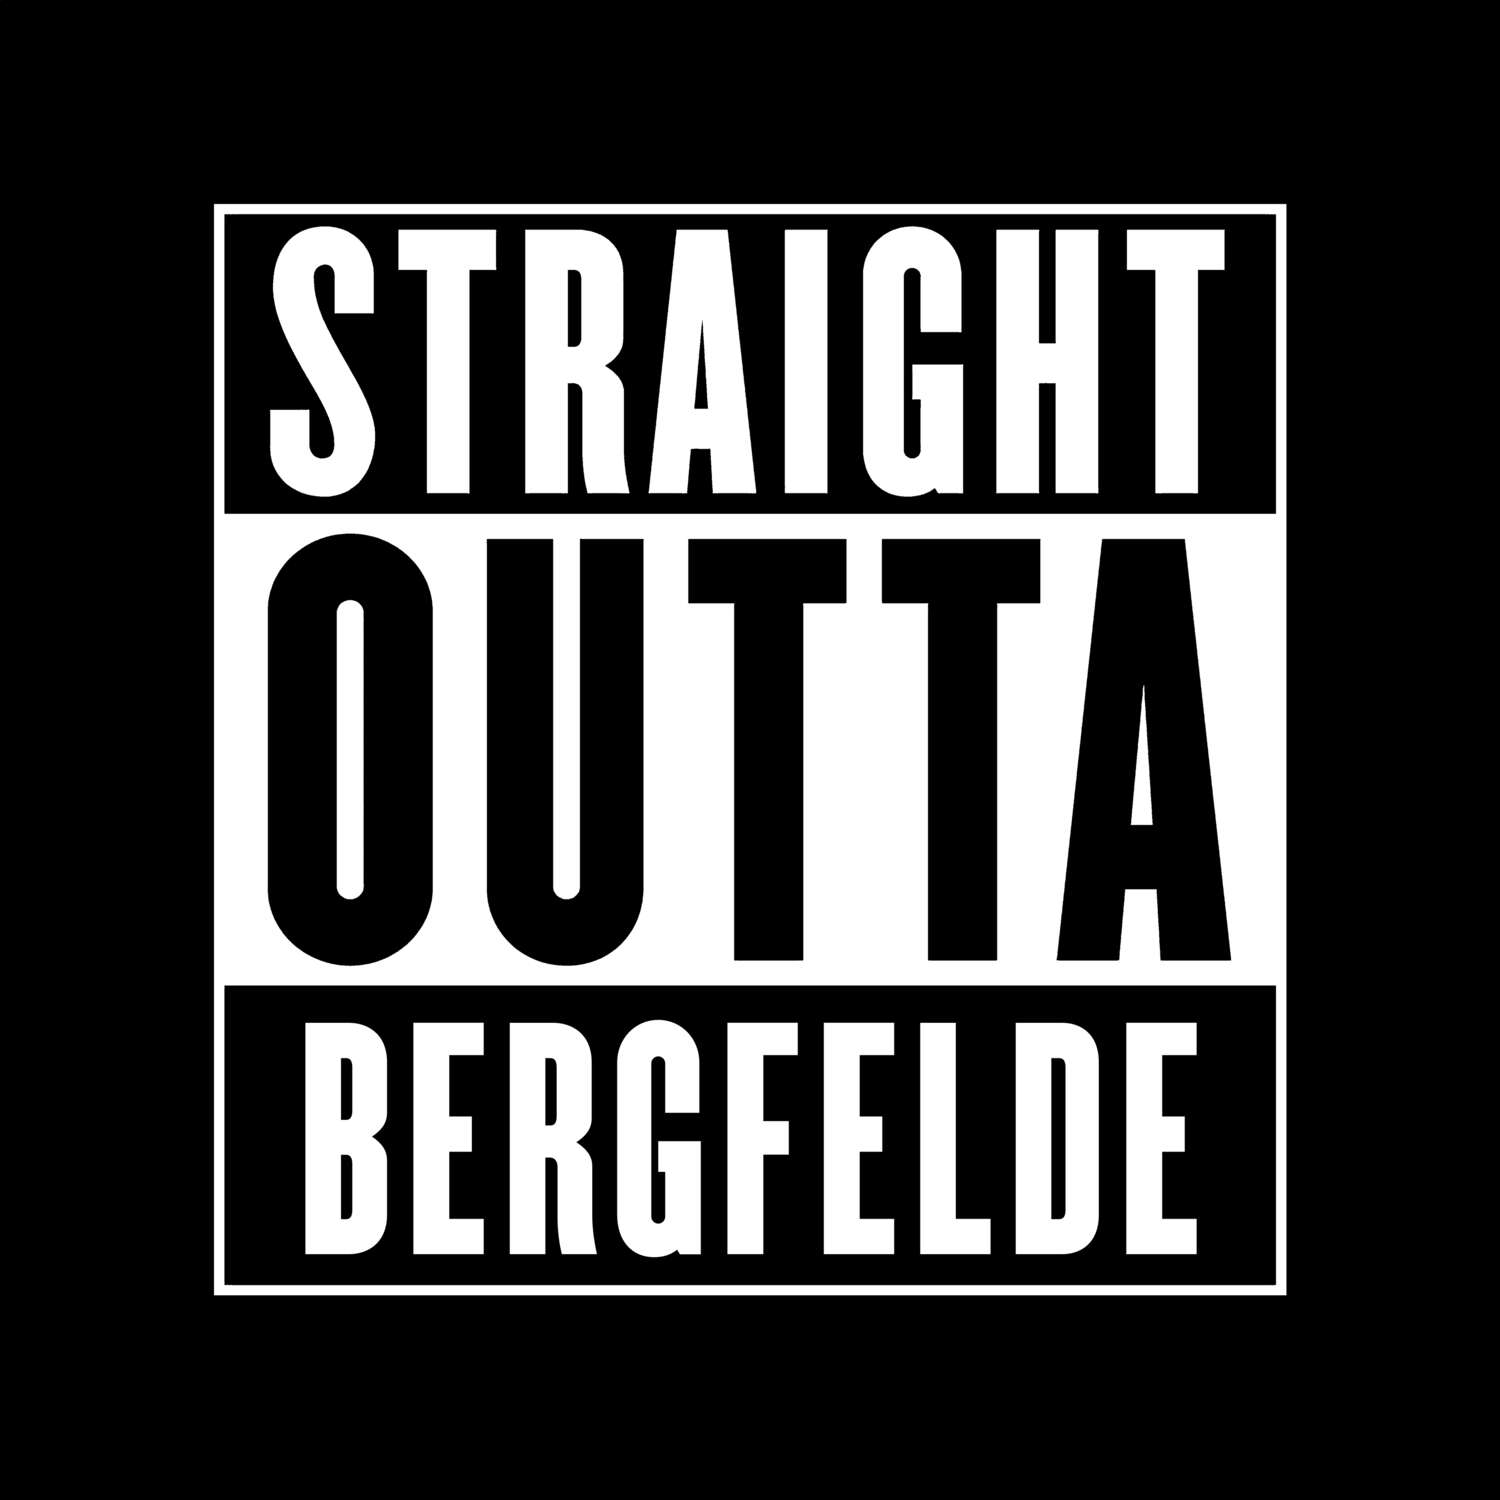 Bergfelde T-Shirt »Straight Outta«